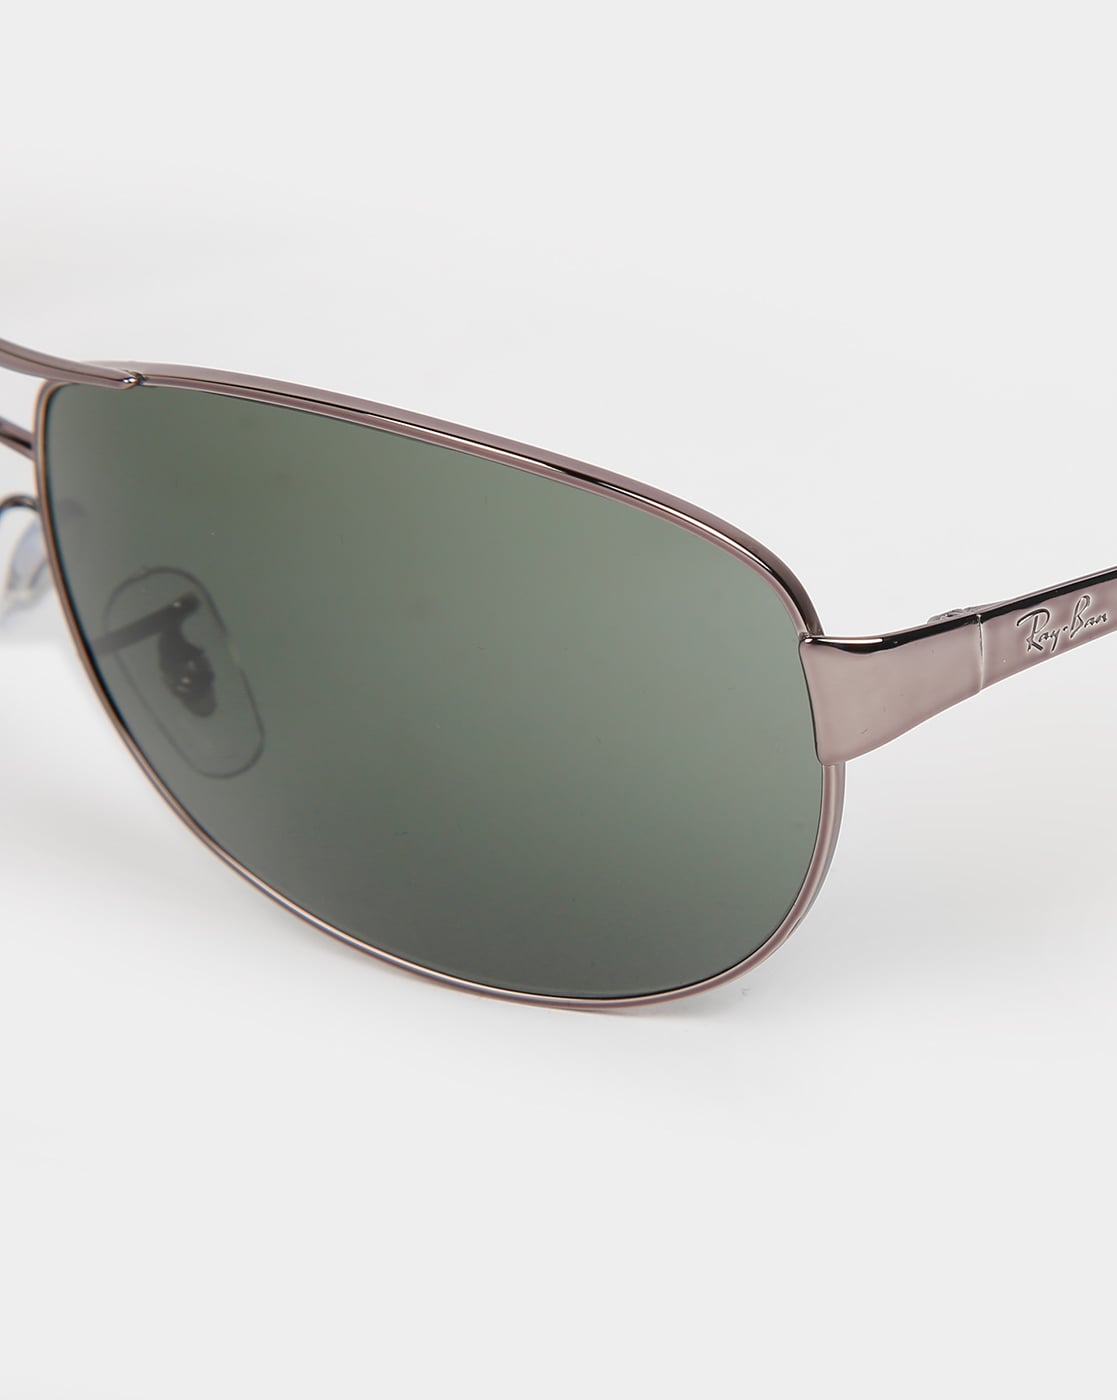 Buy Ray-Ban Aviator Sunglasses (Gunmetal) (RB3342|004/5160) at Amazon.in